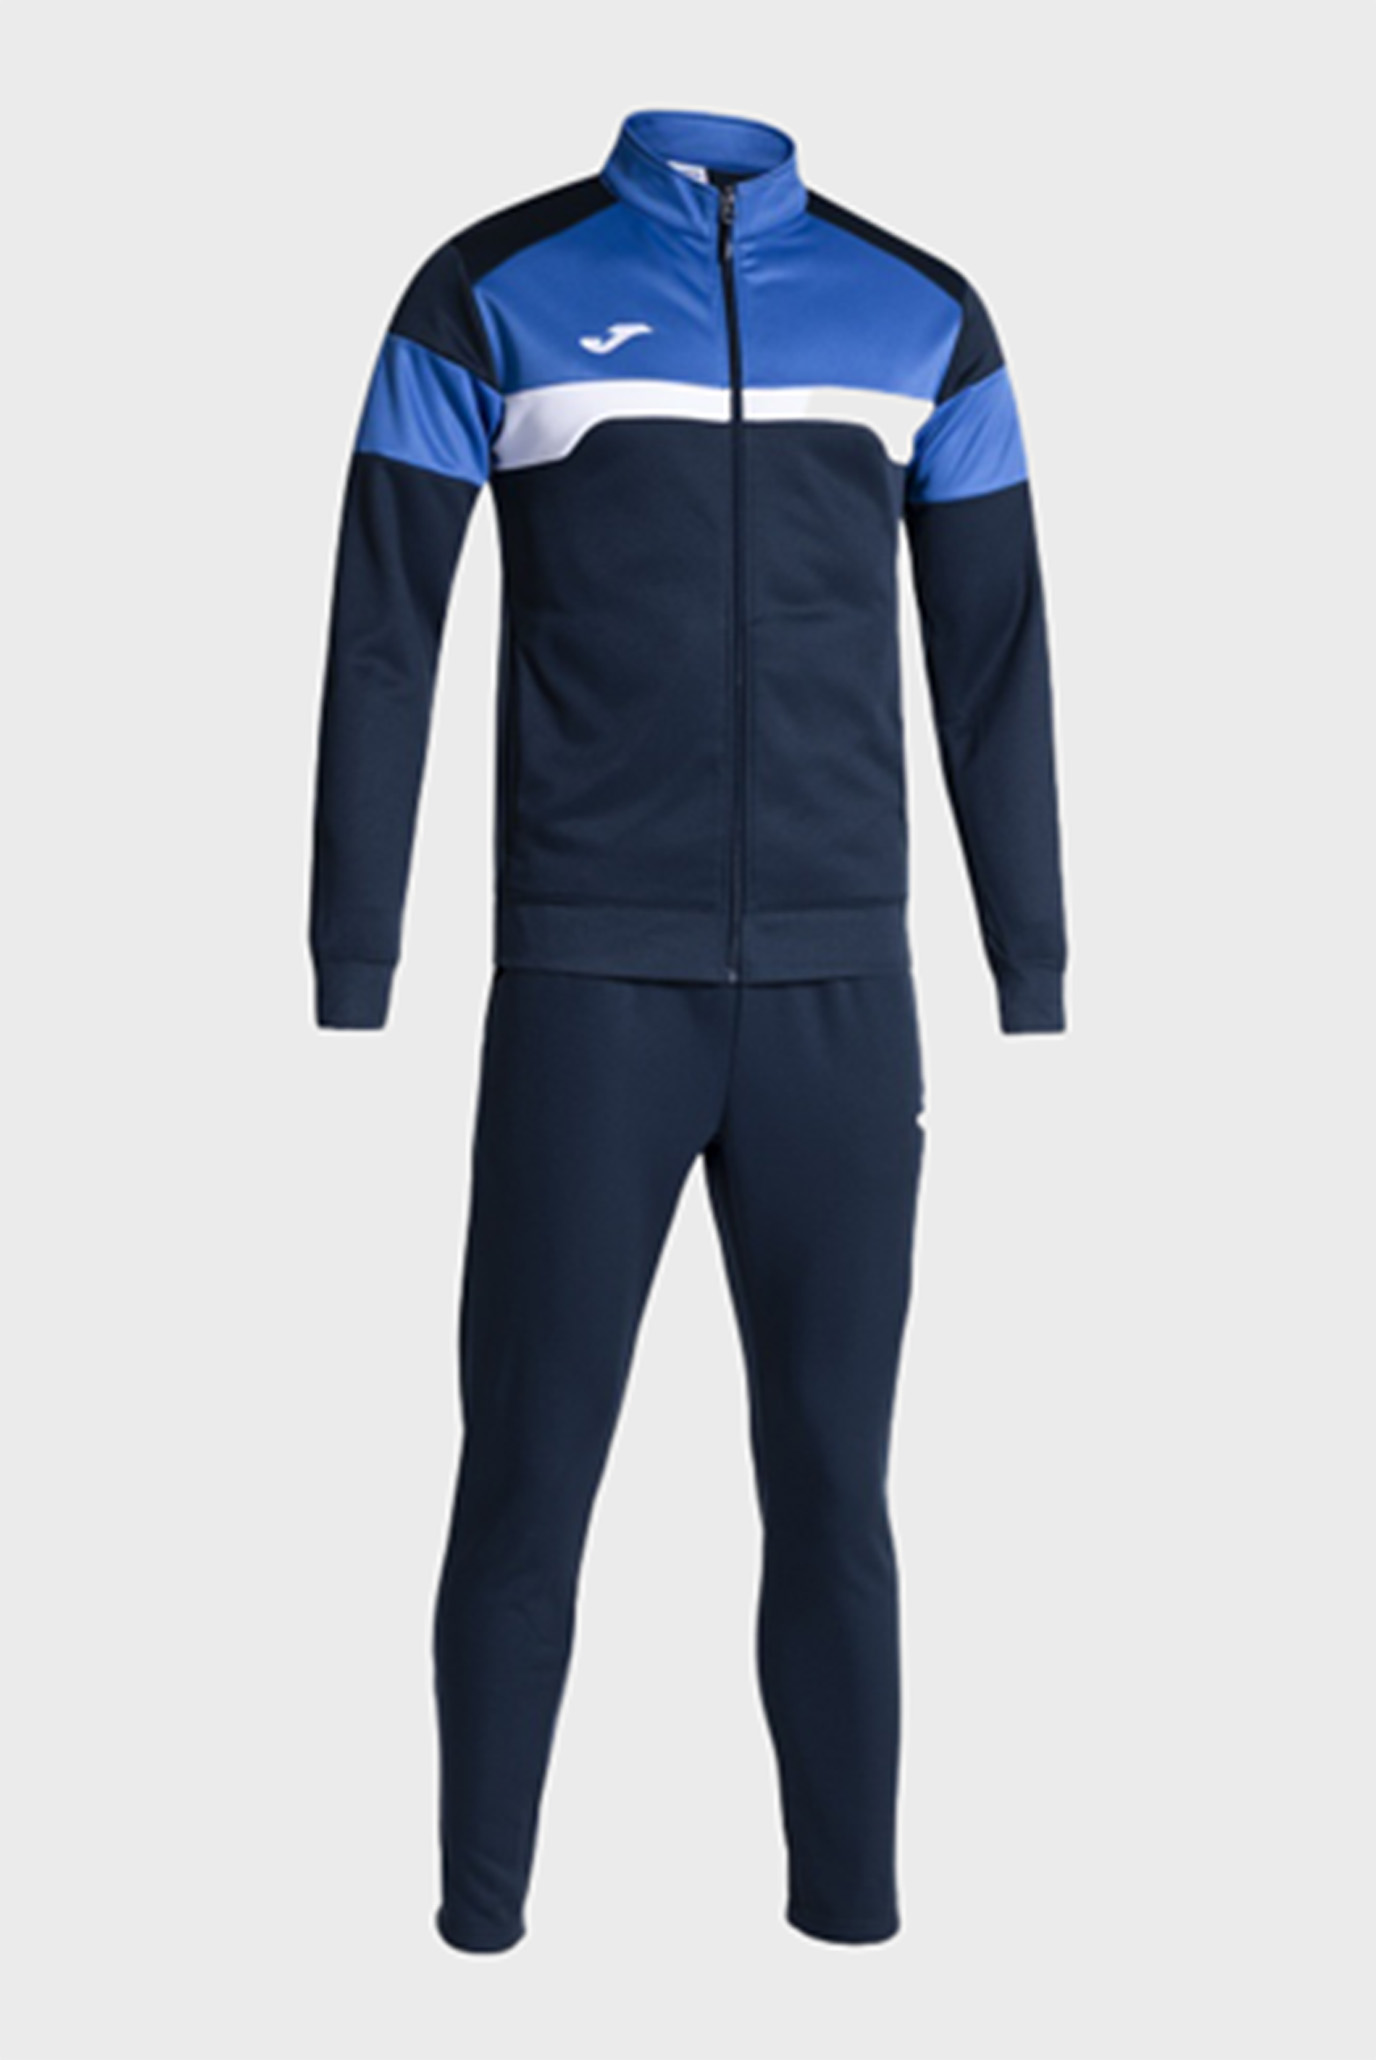 Мужской темно-синий спортивный костюм (кофта, брюки) 1